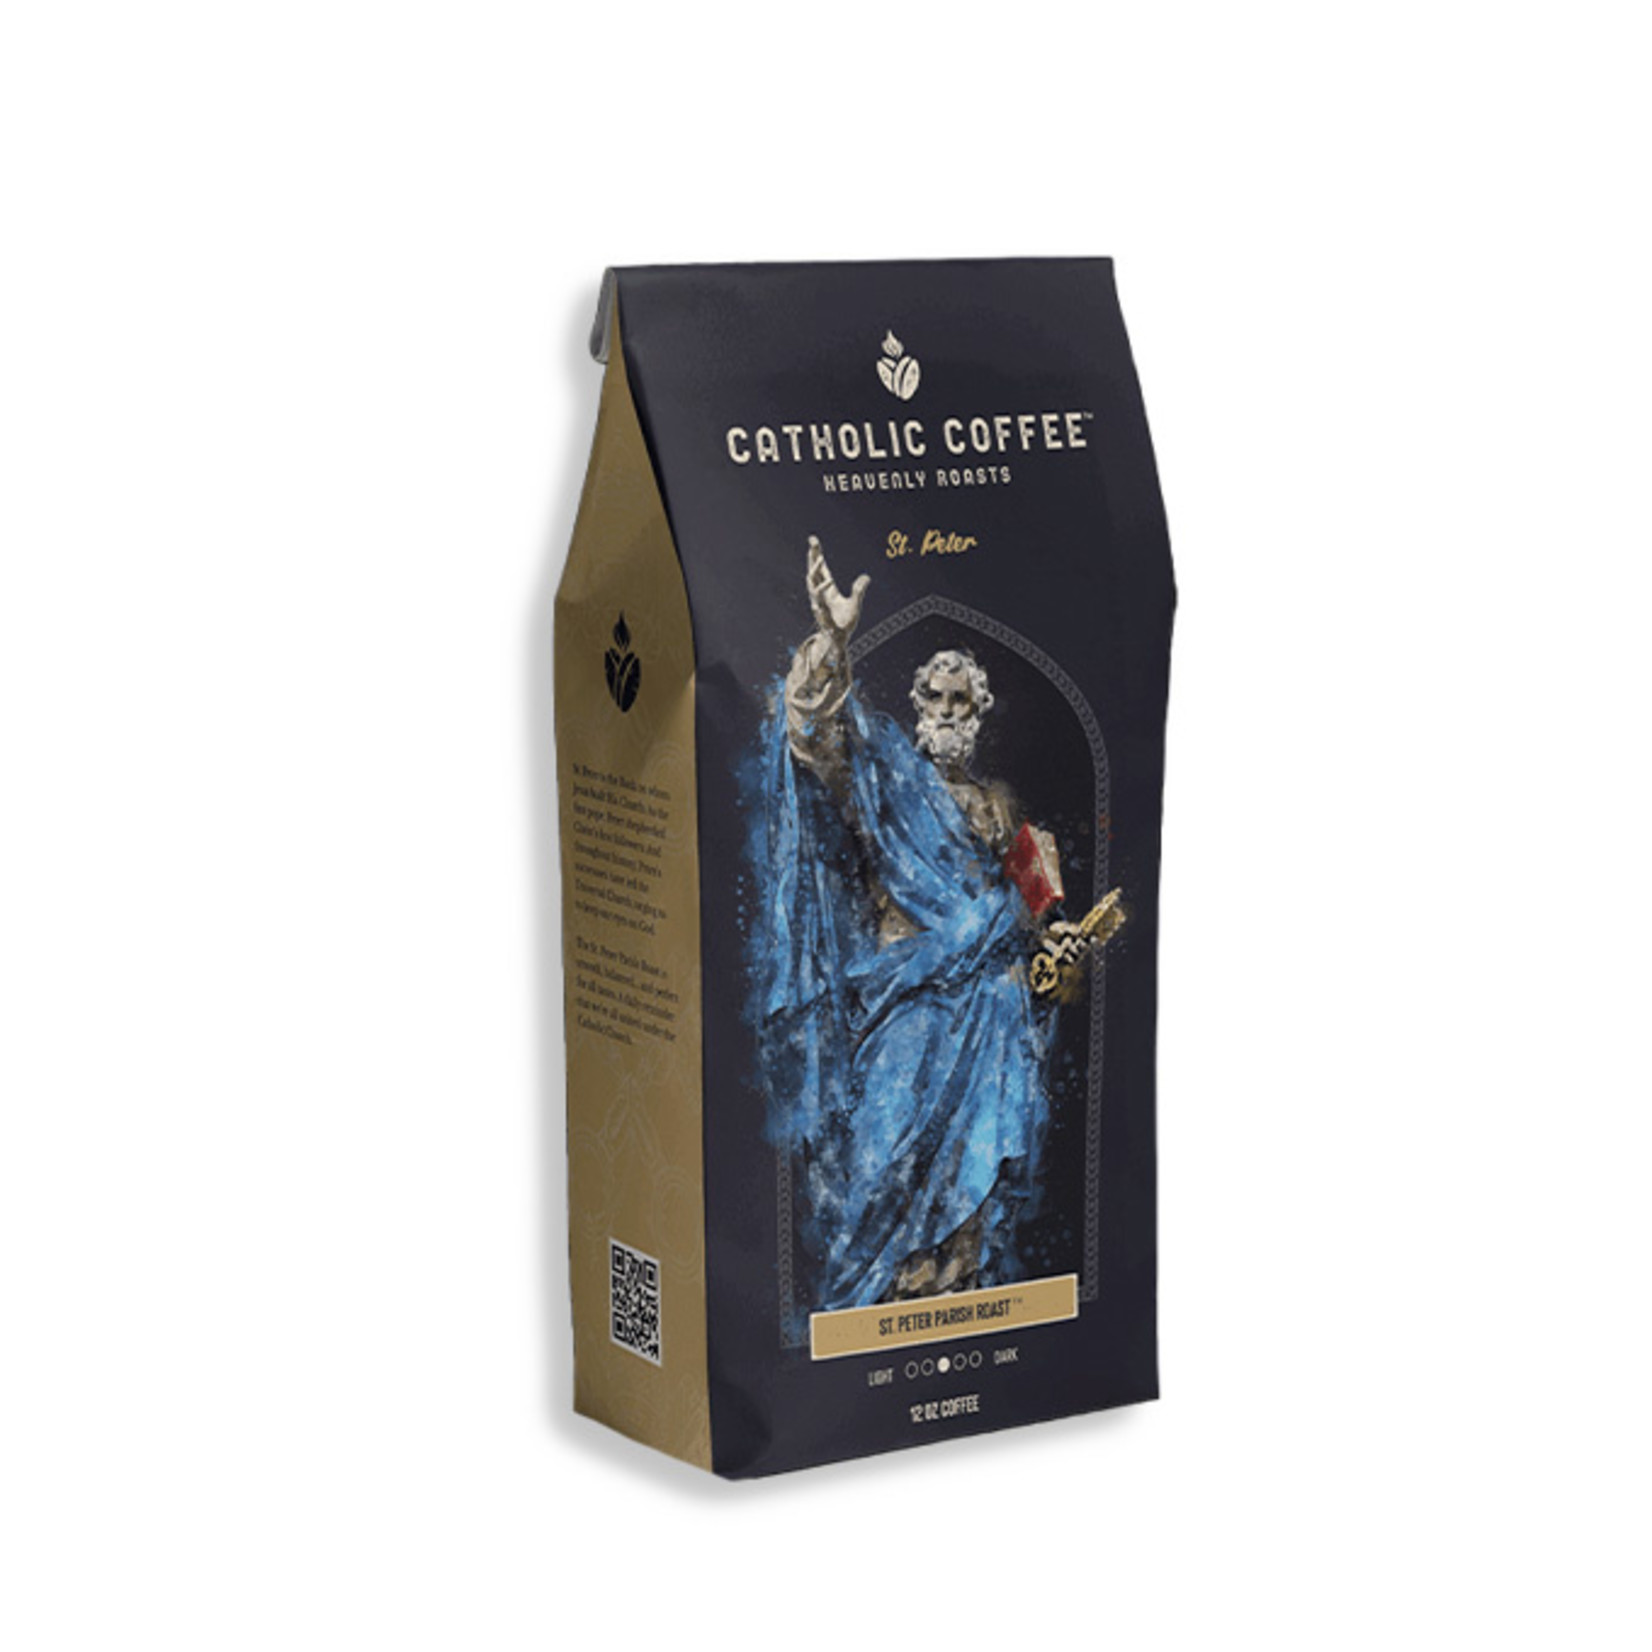 Catholic Coffee